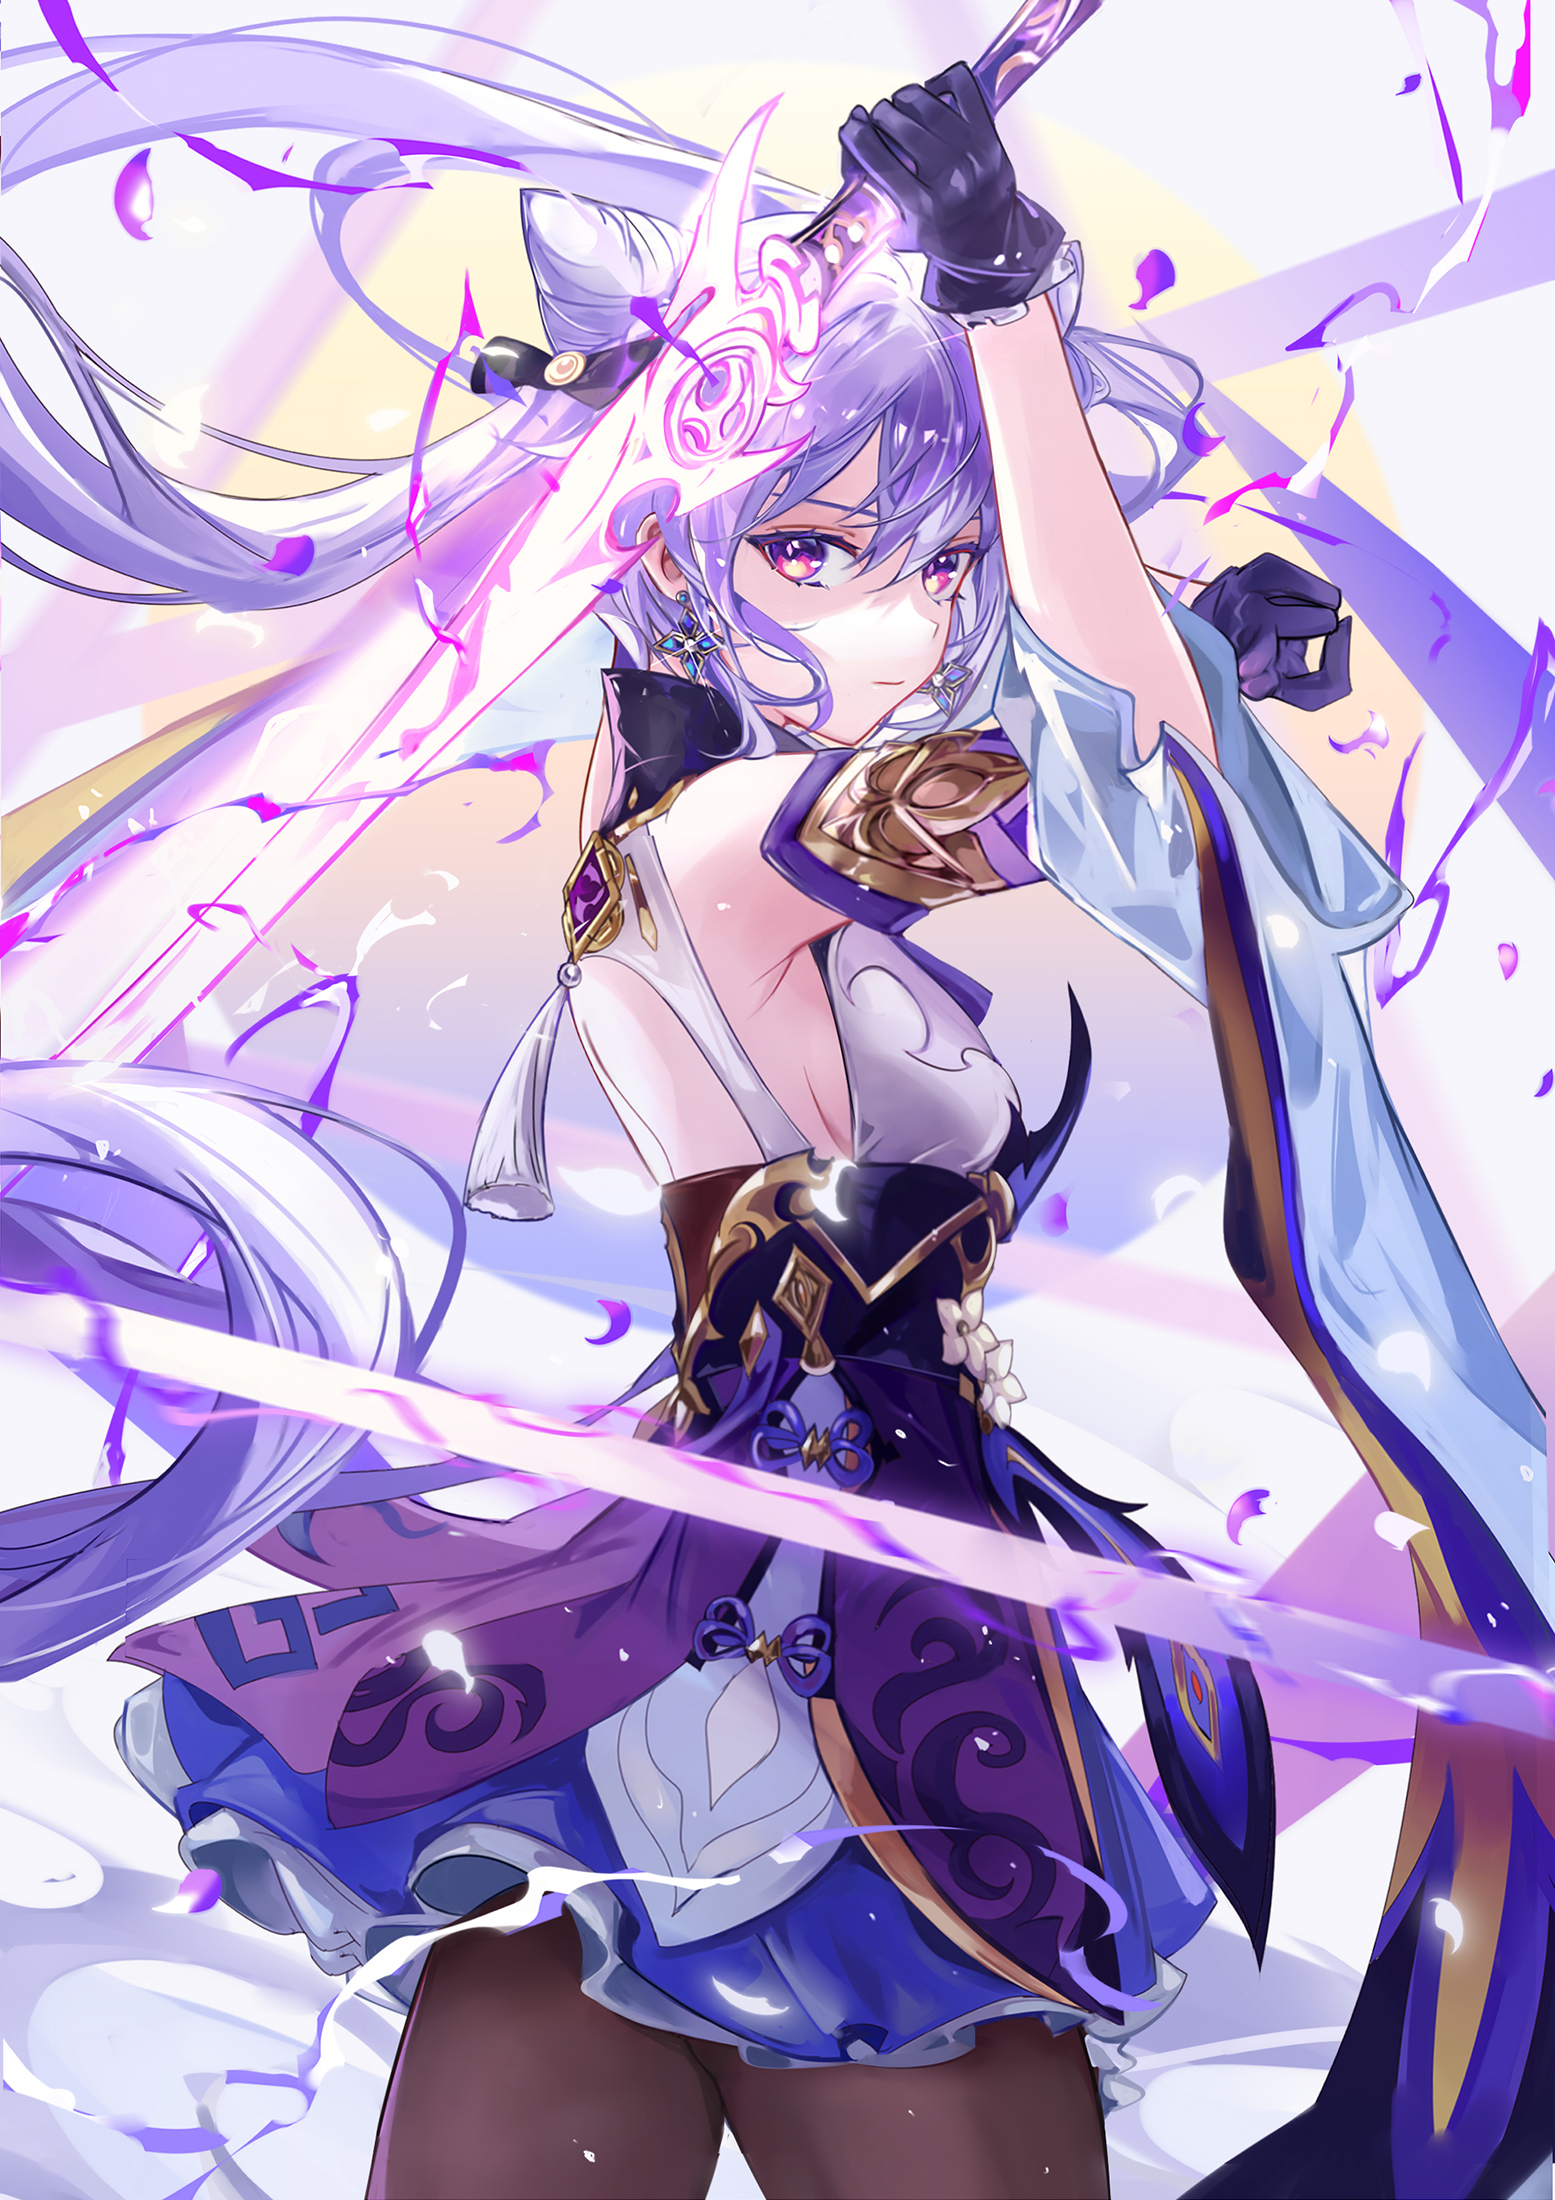 Anime 1555x2200 anime girls Genshin Impact Keqing (Genshin Impact) sword portrait display purple hair purple eyes twintails gloves petals